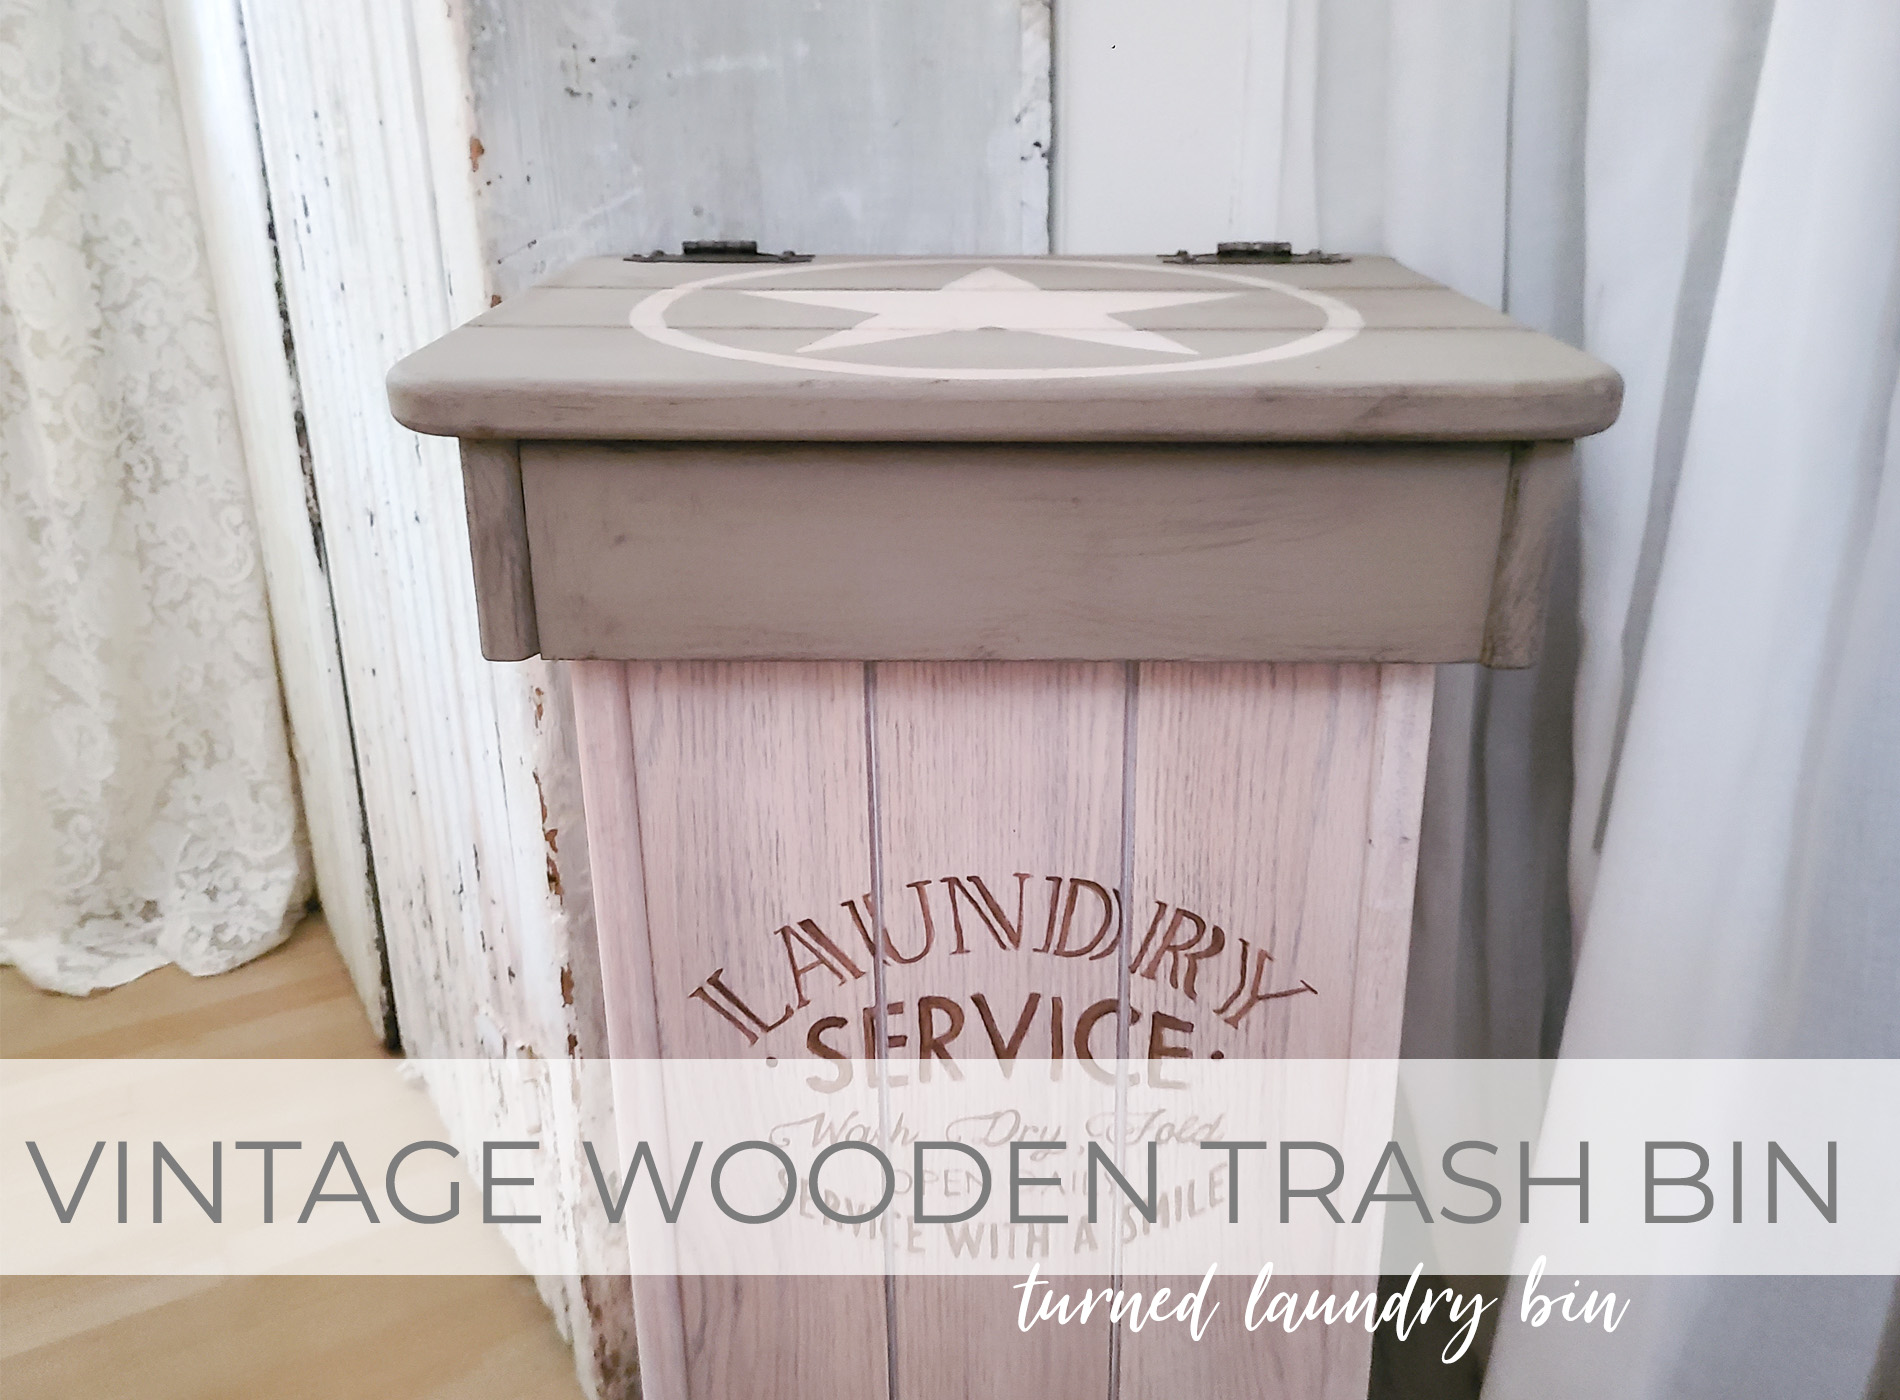 Vintage Wooden Trash Bin Upcycled by Larissa of Prodigal Pieces | prodigalpieces.com #prodigalpieces